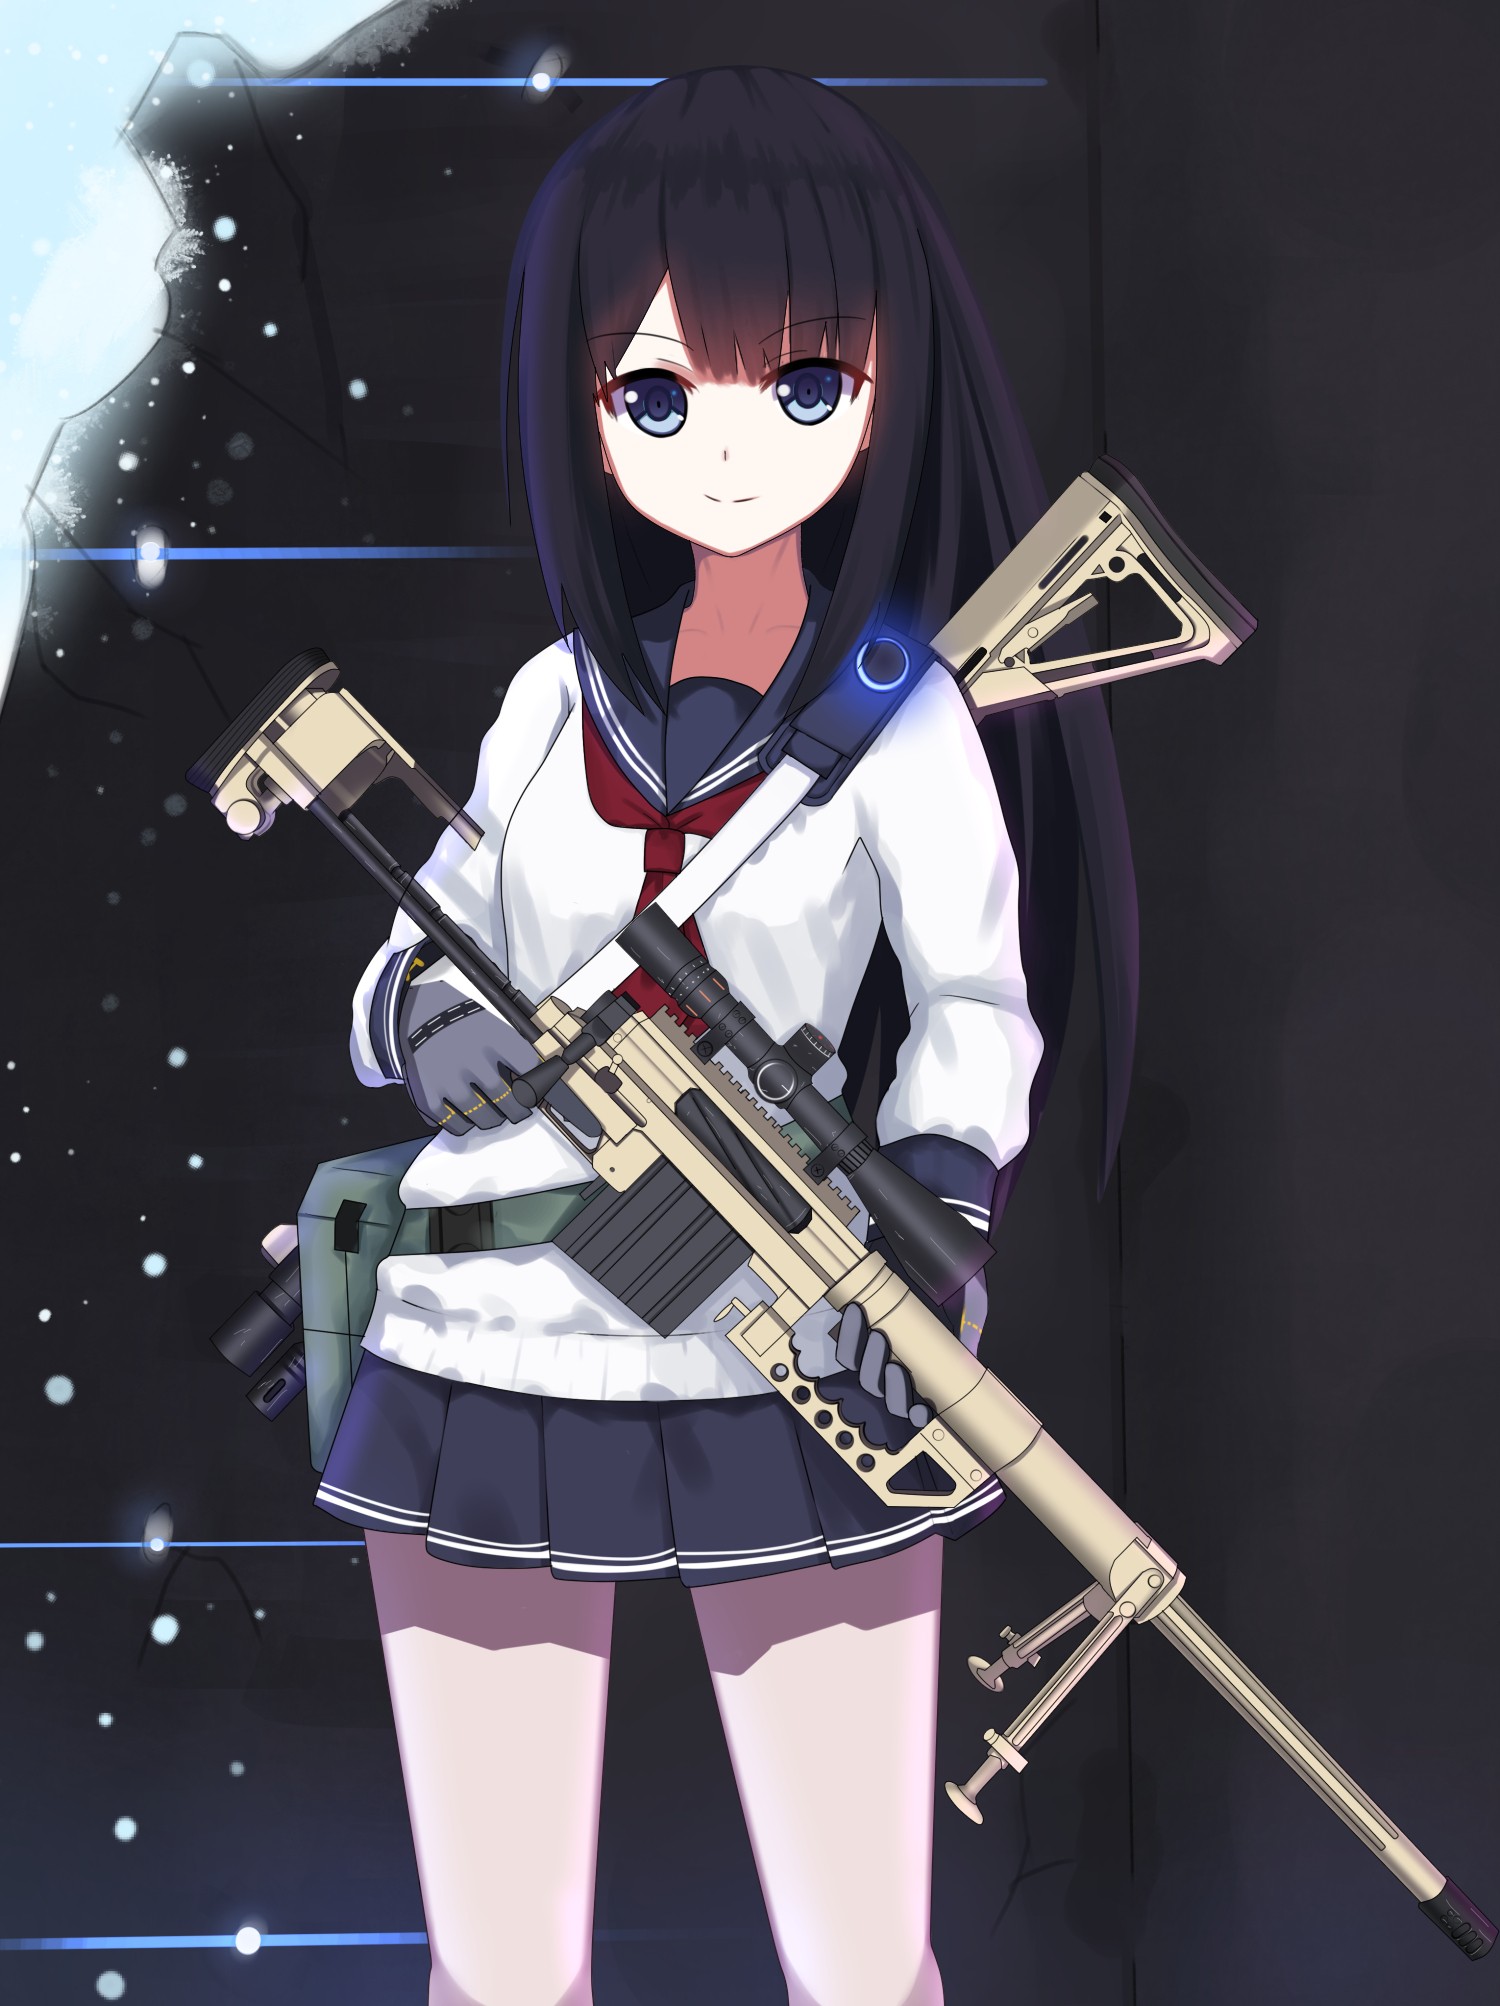 Anime 1500x2006 anime anime girls weapon CheyTac M200 original characters school uniform rifles Pixiv girls with guns miniskirt long hair sniper rifle